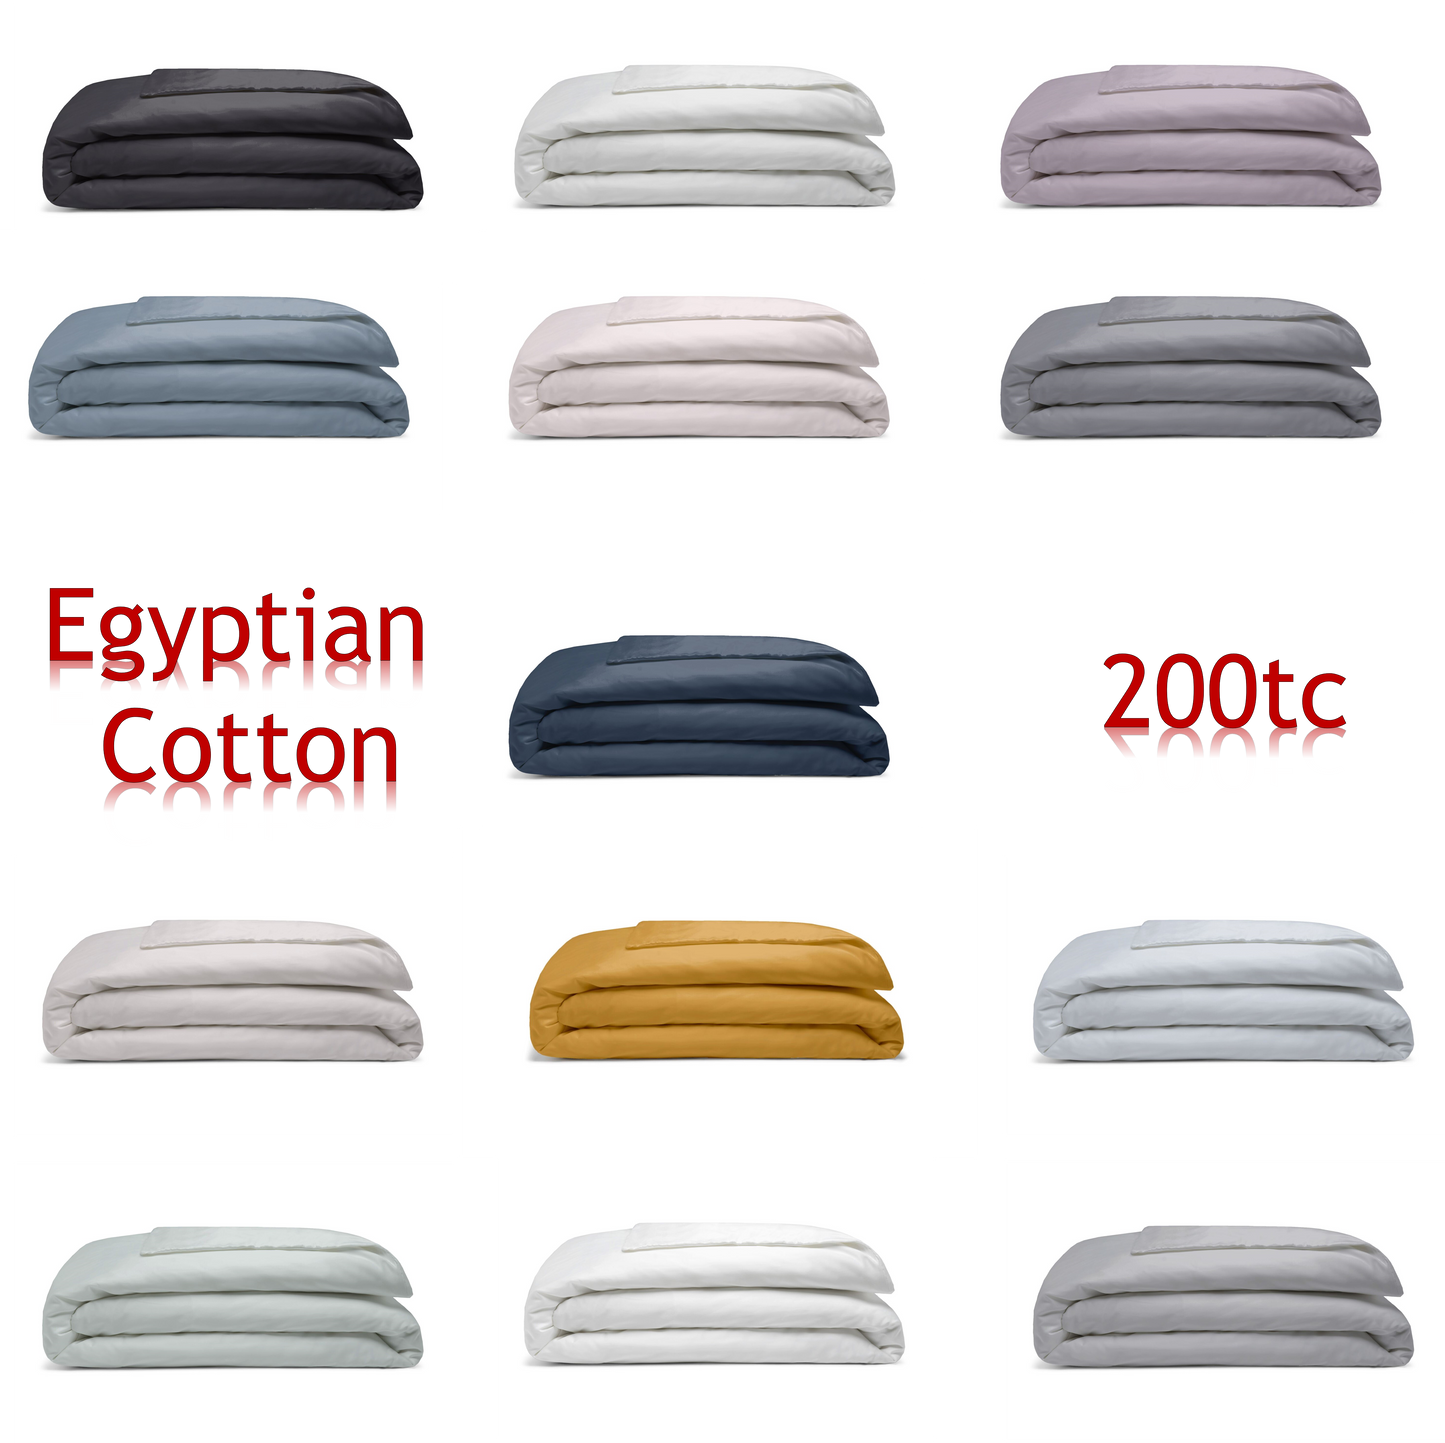 Egyptian 200tc Single Bedding pack